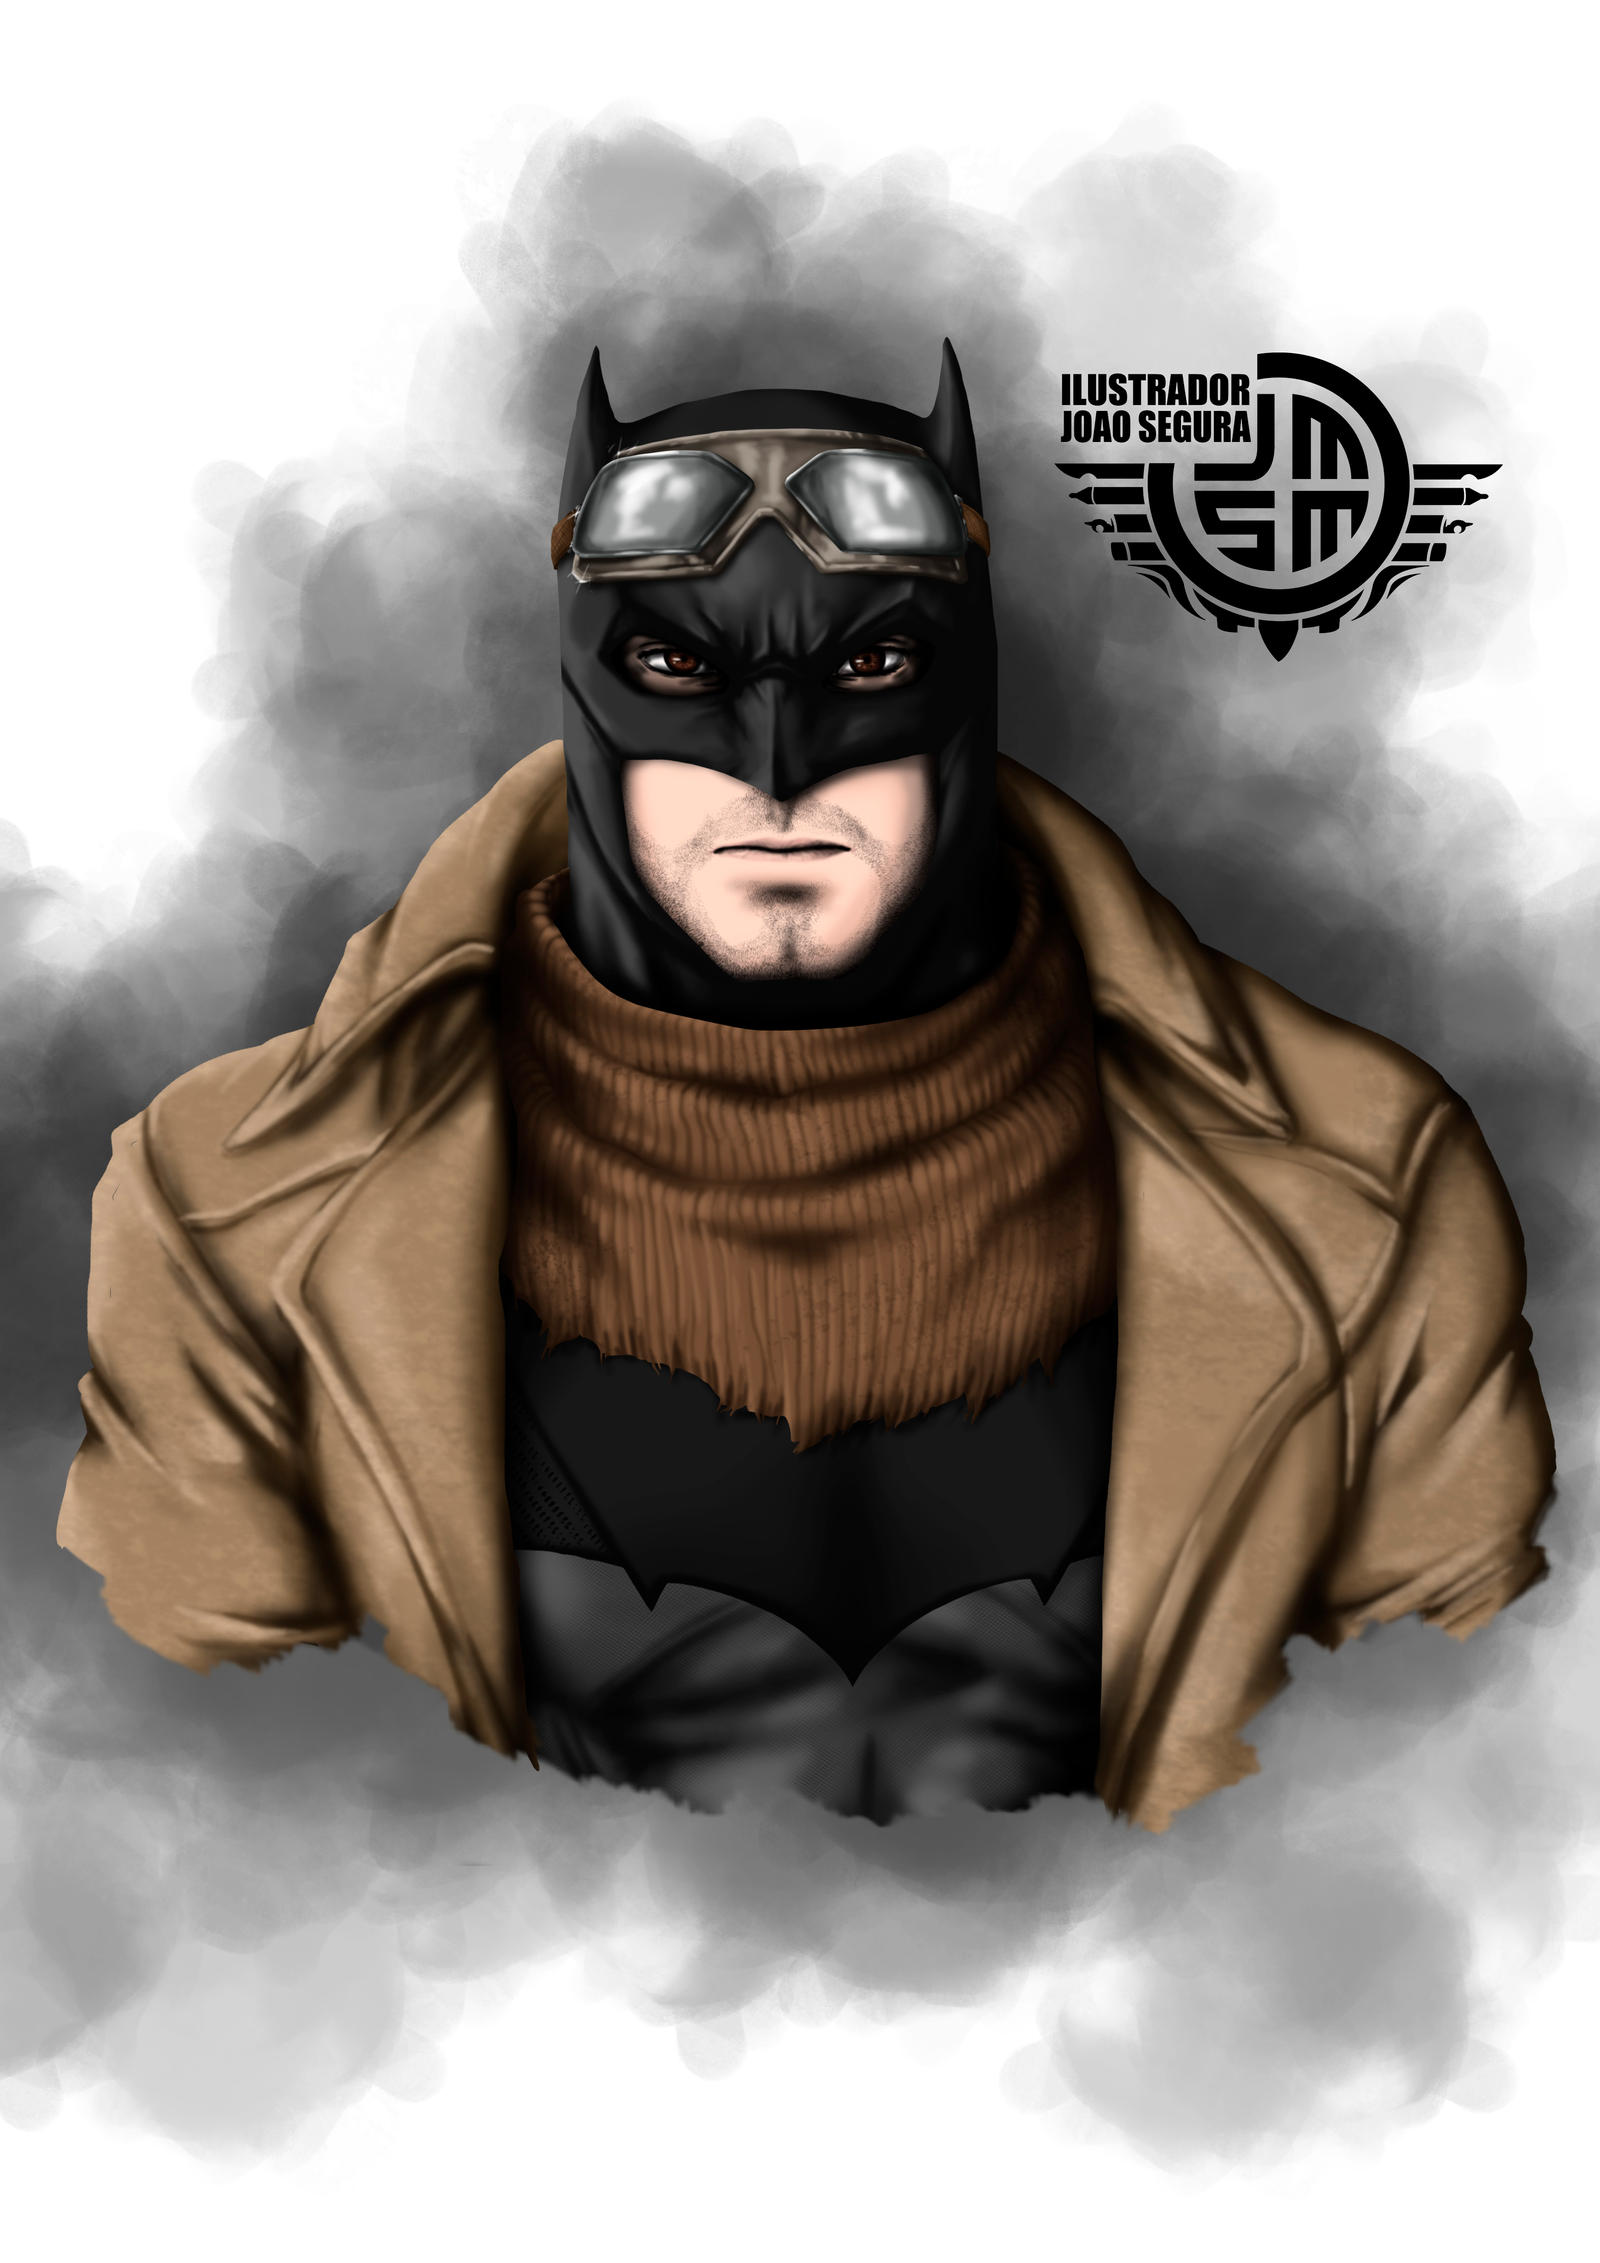 Batman Traje De Guerra by ilustradorjoaosegura on DeviantArt